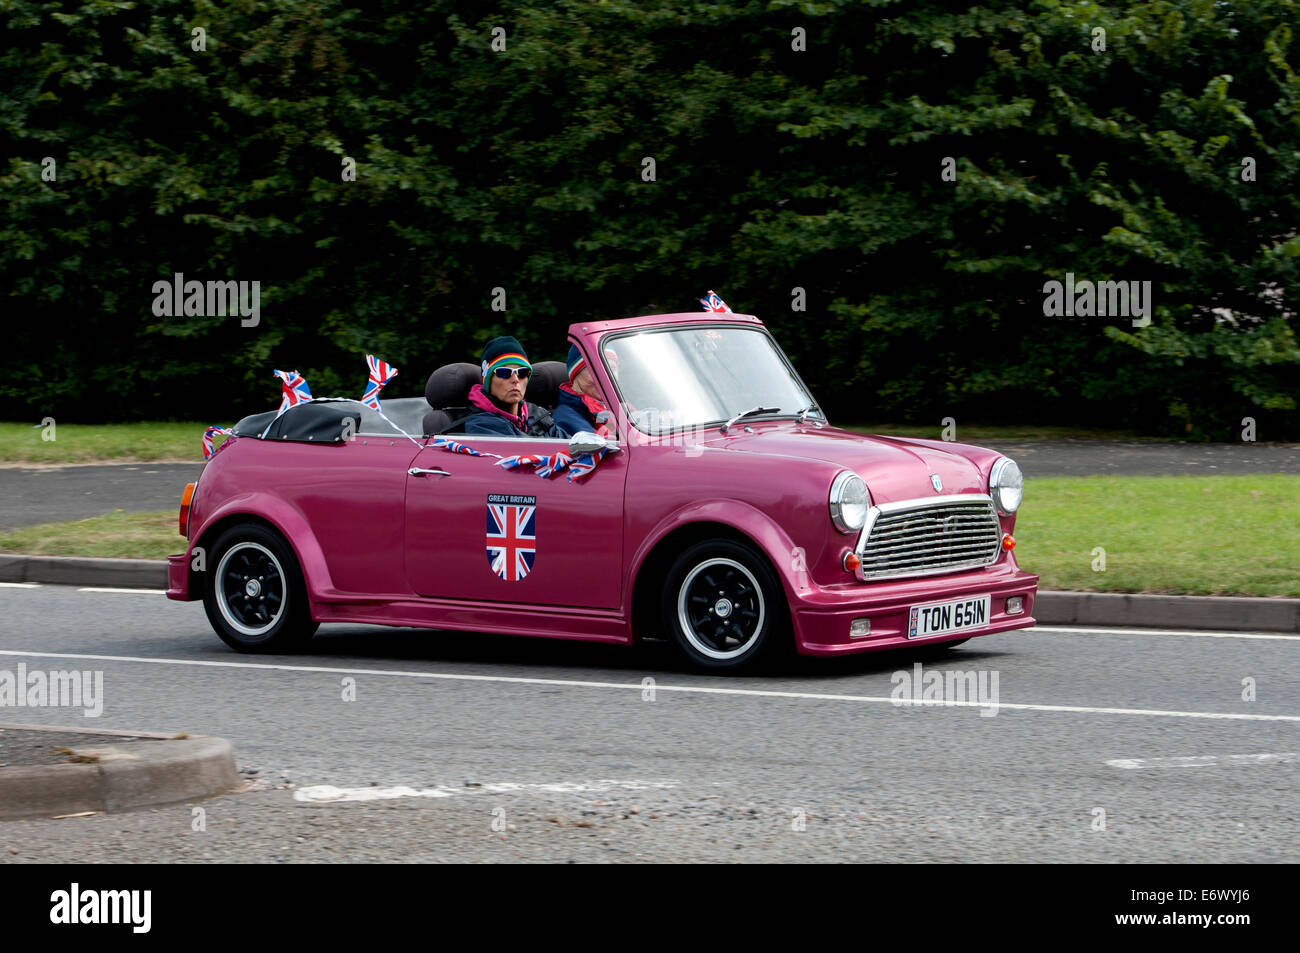 Mini convertible car on the Fosse Way road, Warwickshire, UK Stock Photo